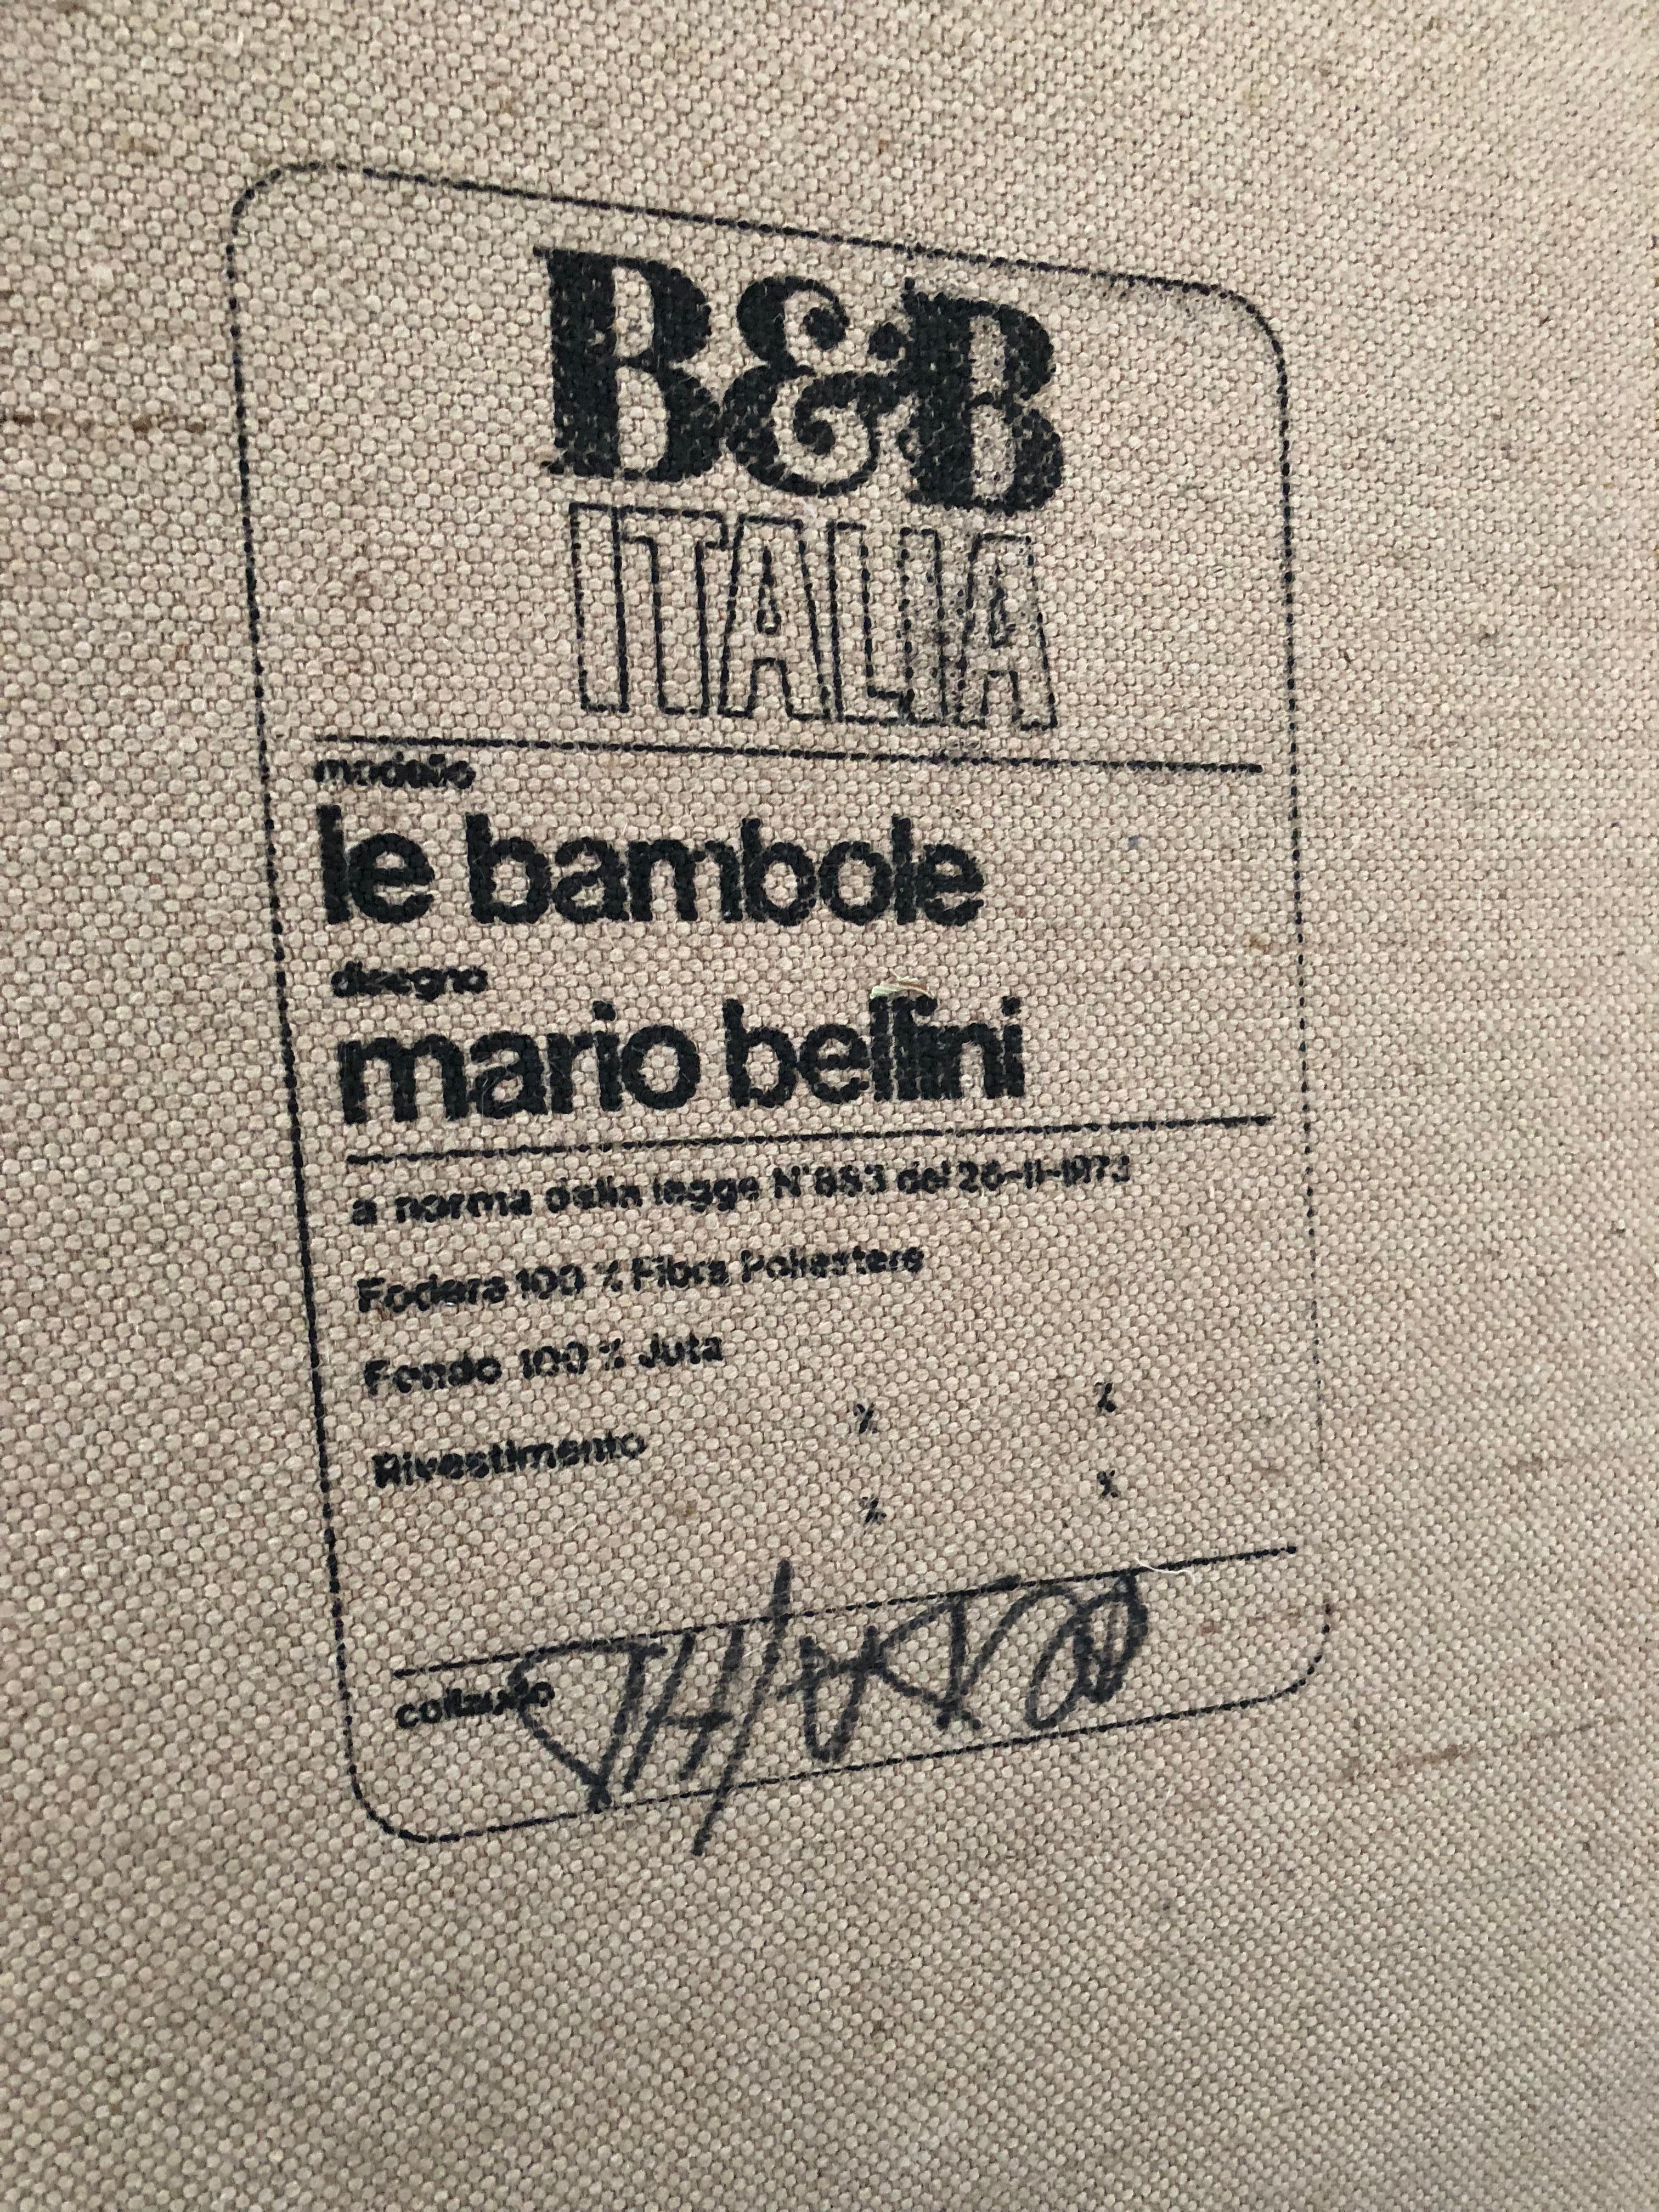 Leather 'Bambole' Living Room Set by Mario Bellini, 1972, Original Period Labels 9